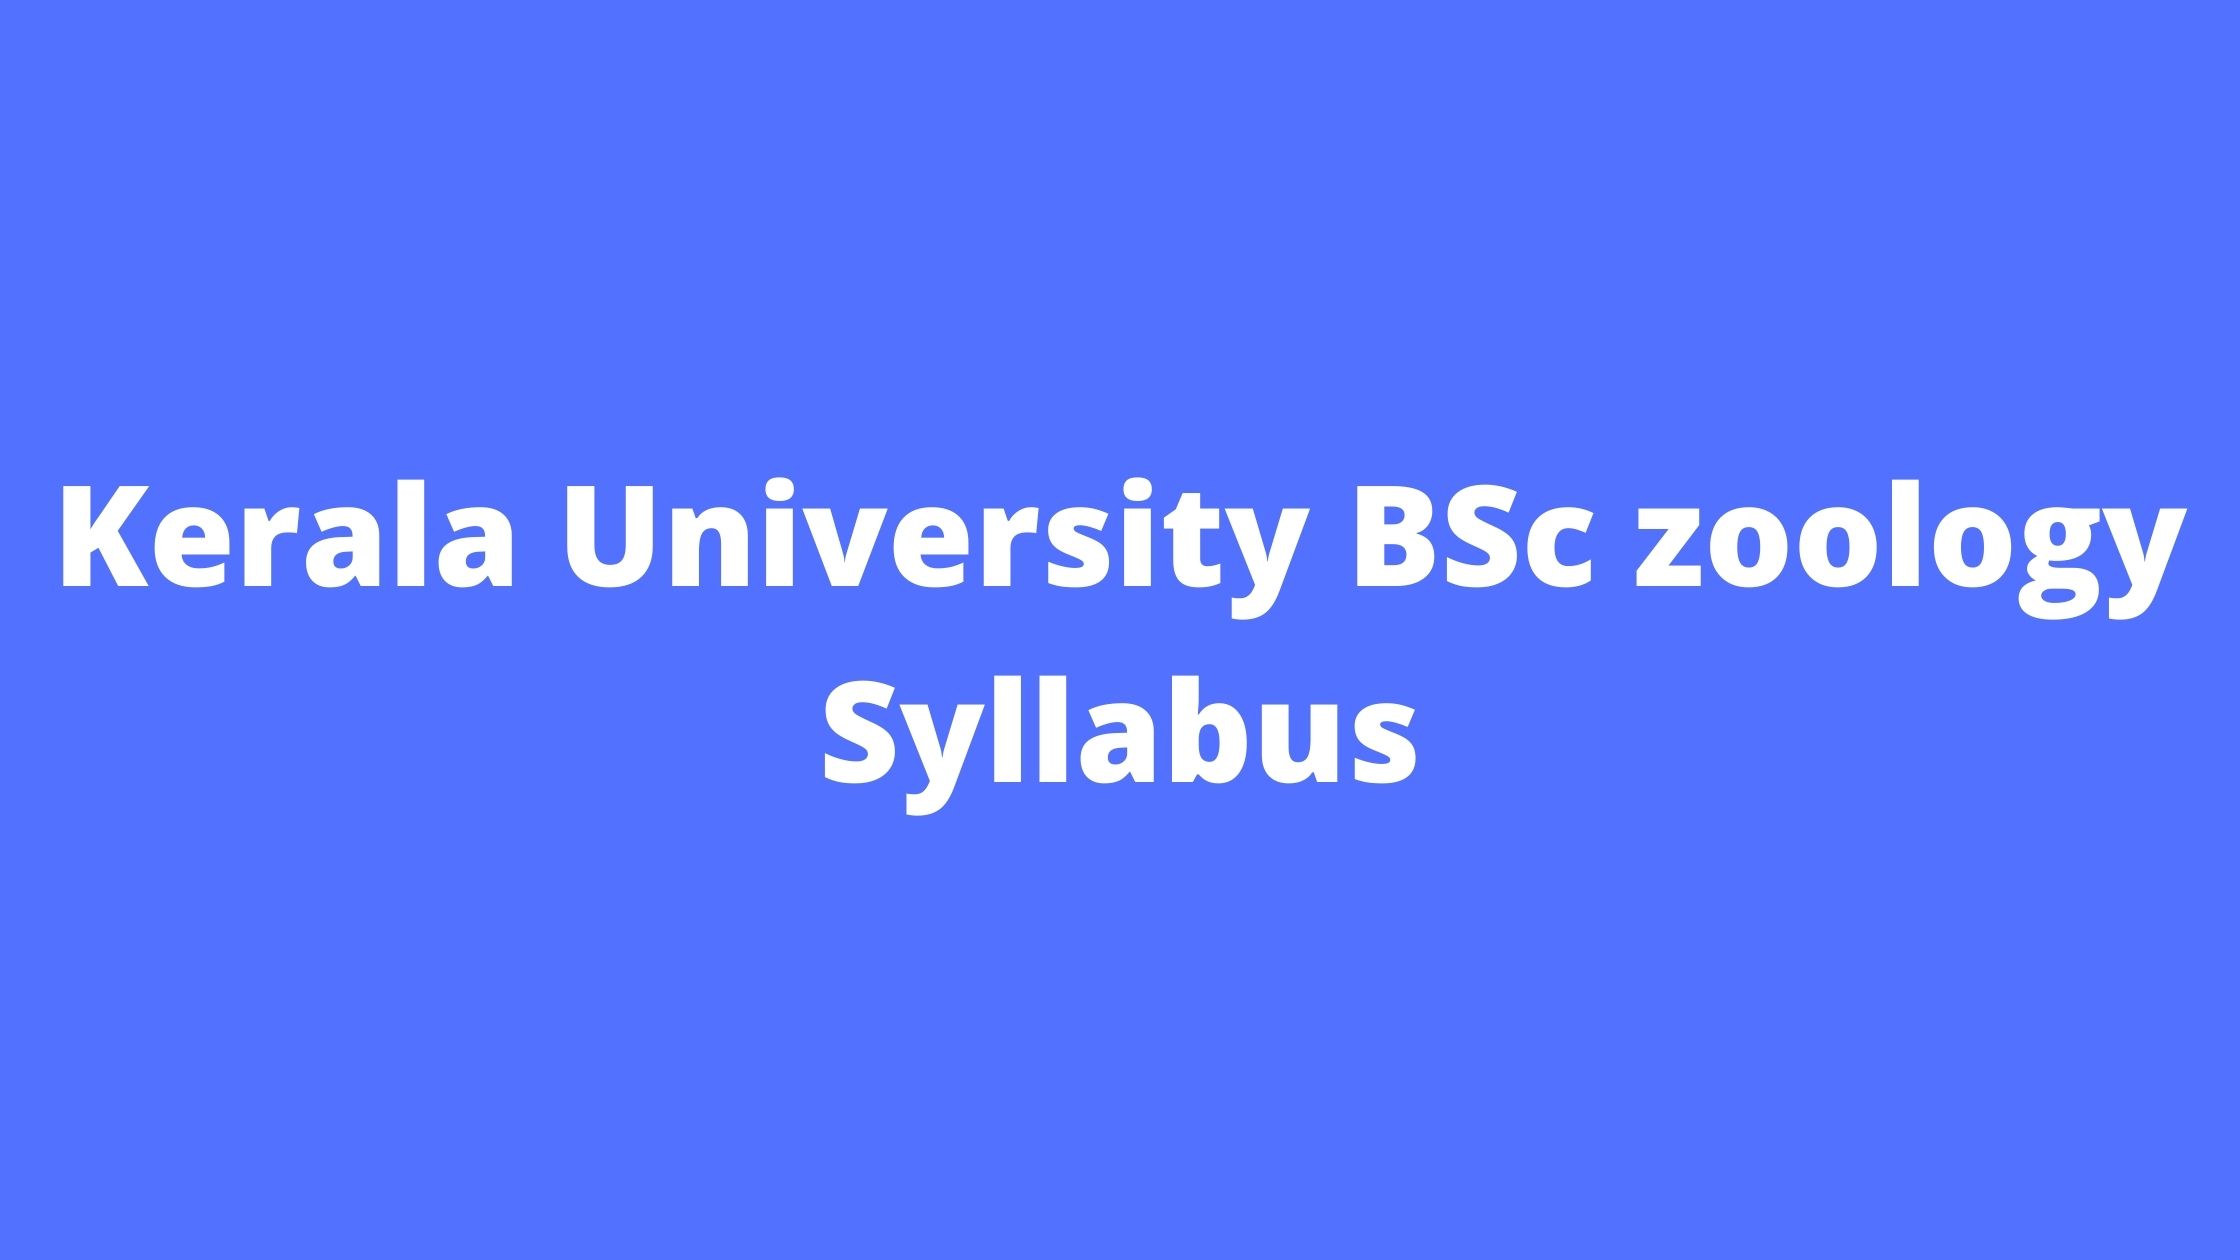 bsc zoology sullabus kerala university